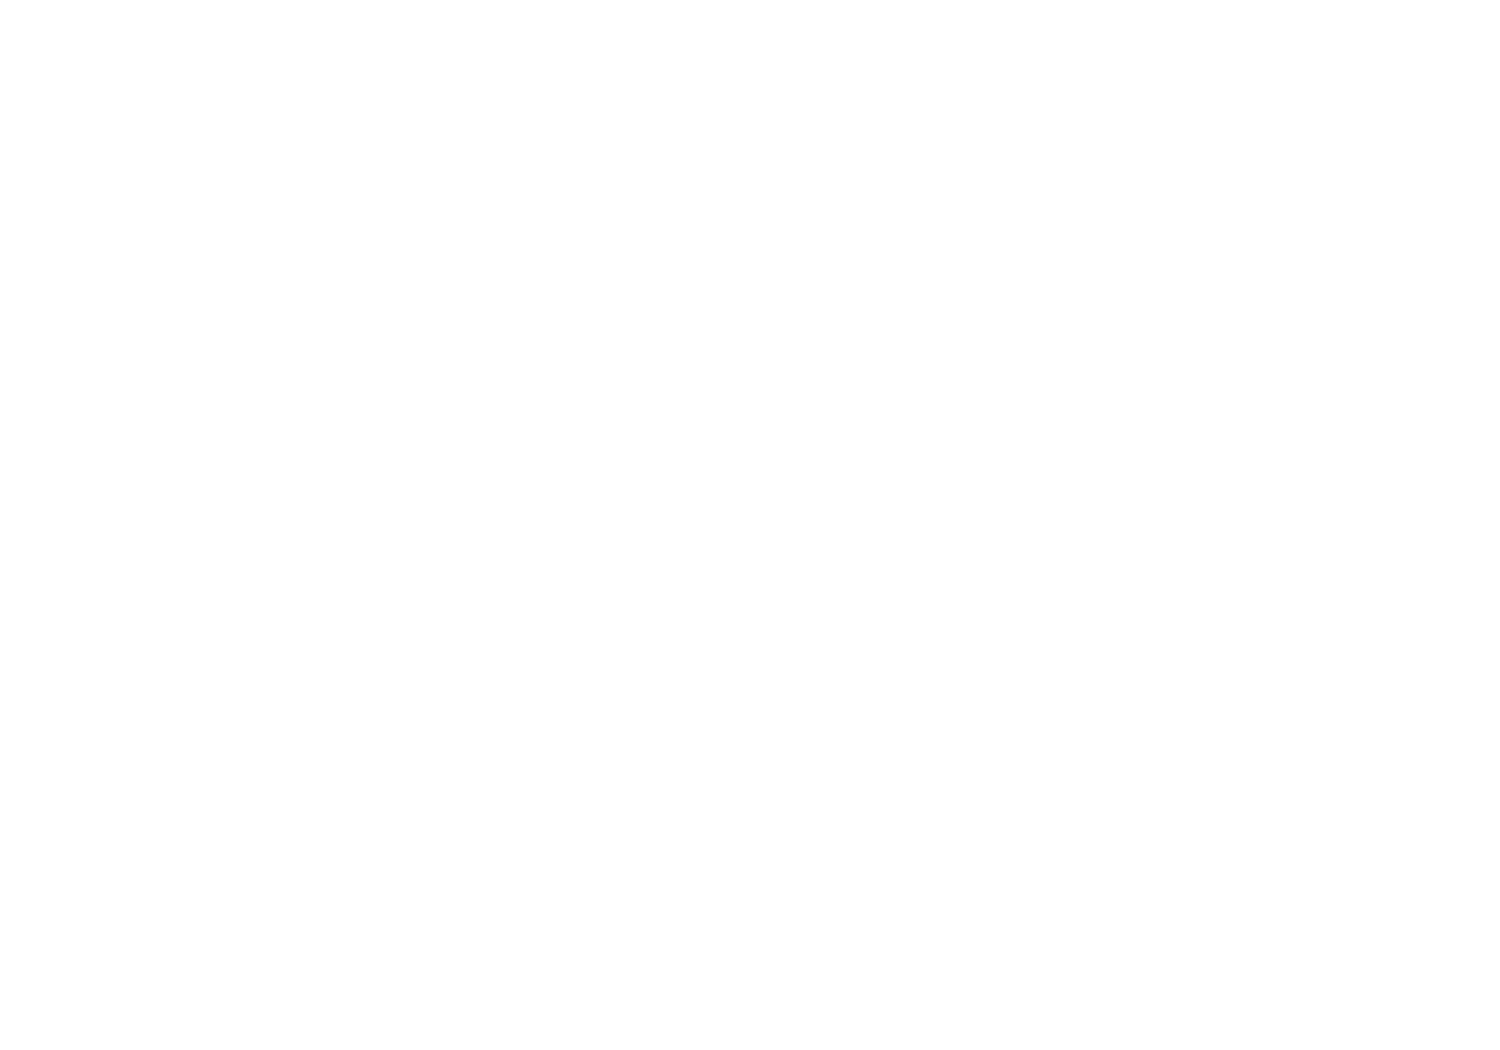 Personal Trainer in Coral Gables & Coconut Grove Miami | Personal Fitness Trainer - National Fitness Science Institute  OMAR F. CORDERO, CMT